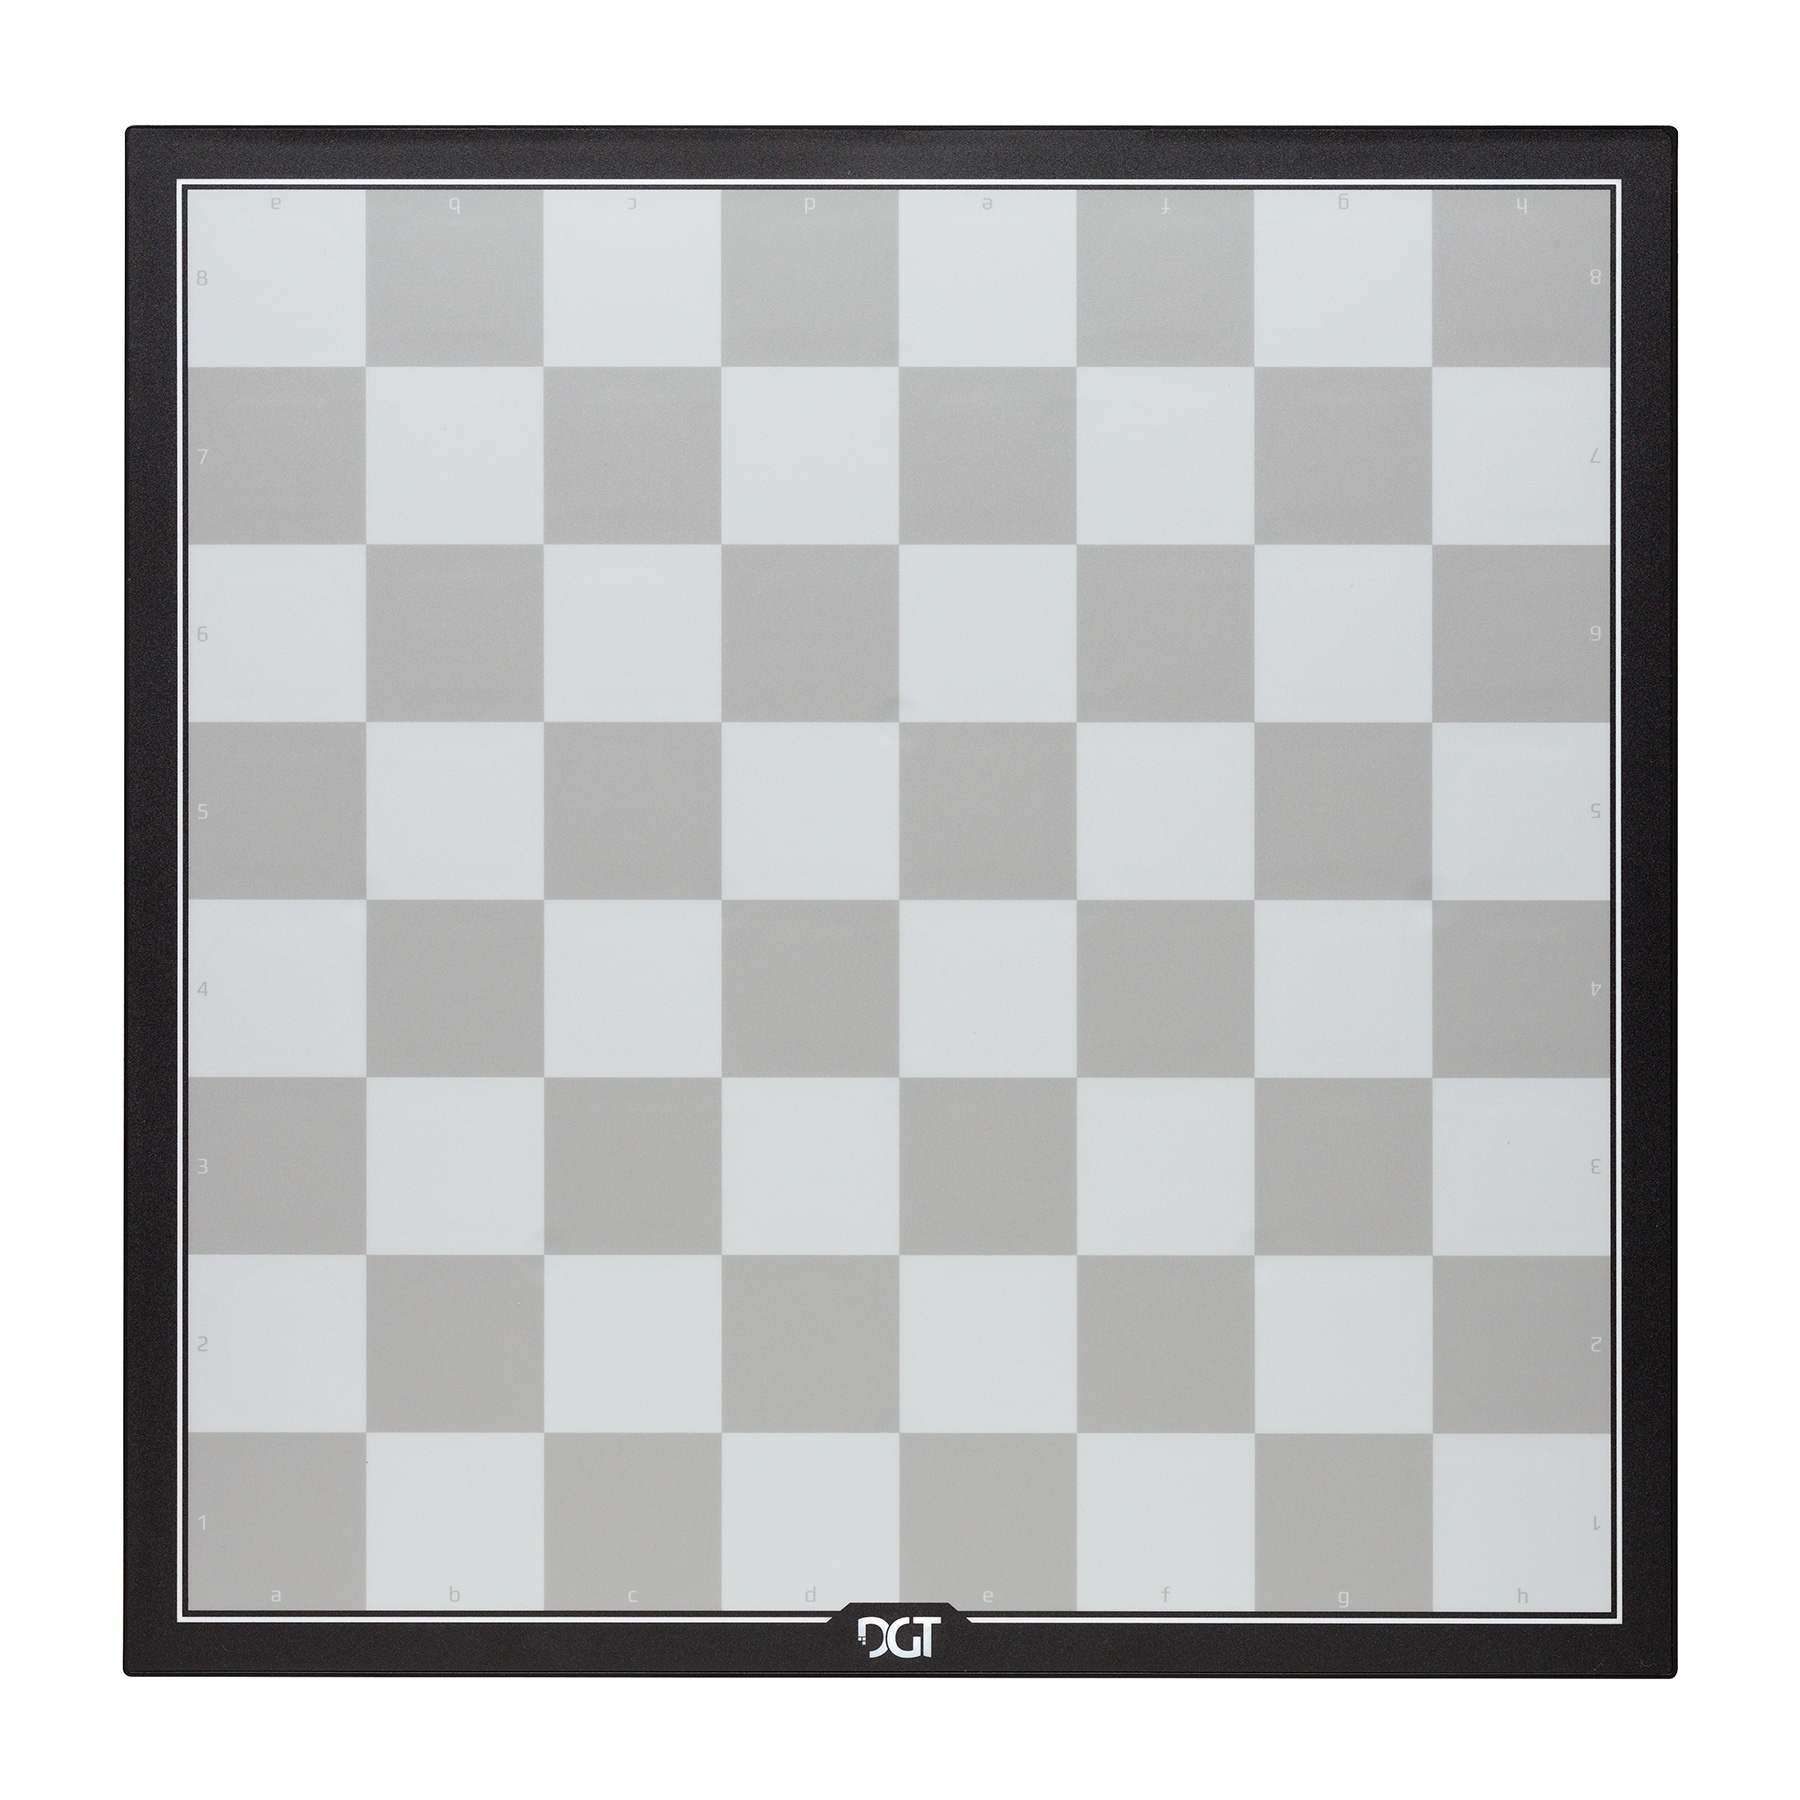 DGT Pegasus Chess Computer – Chess House